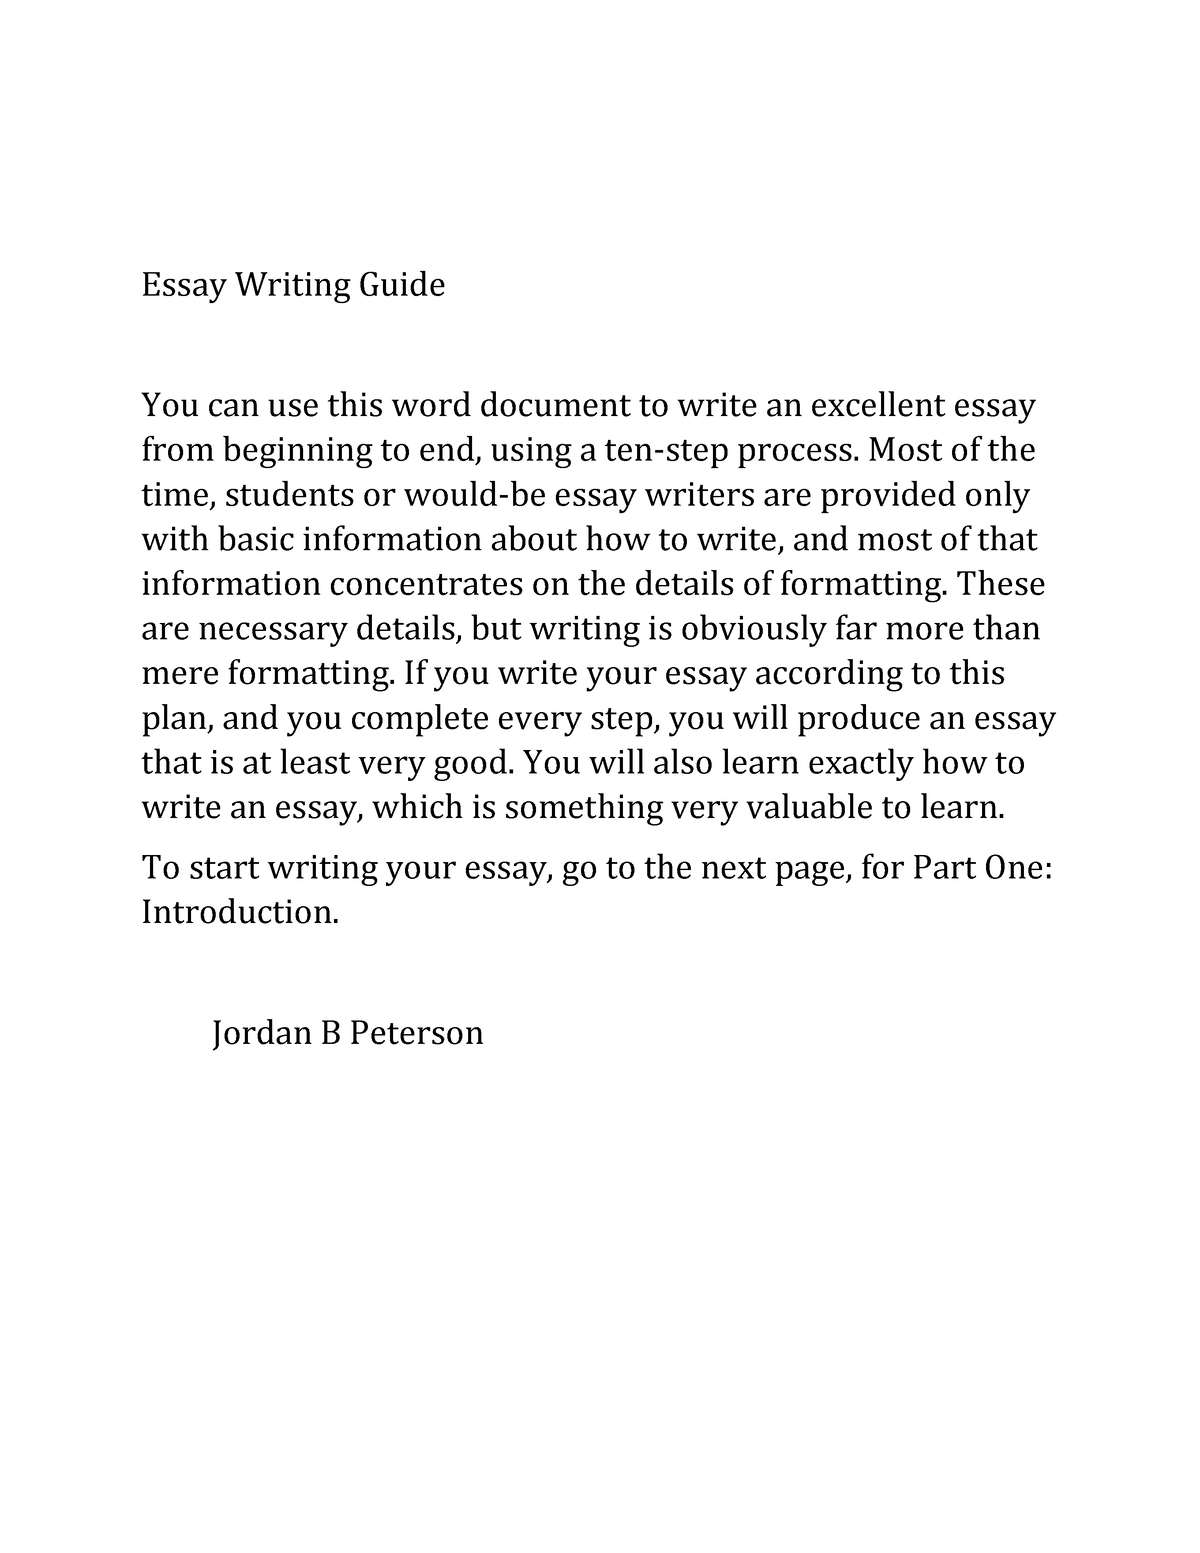 essay write better jordan peterson